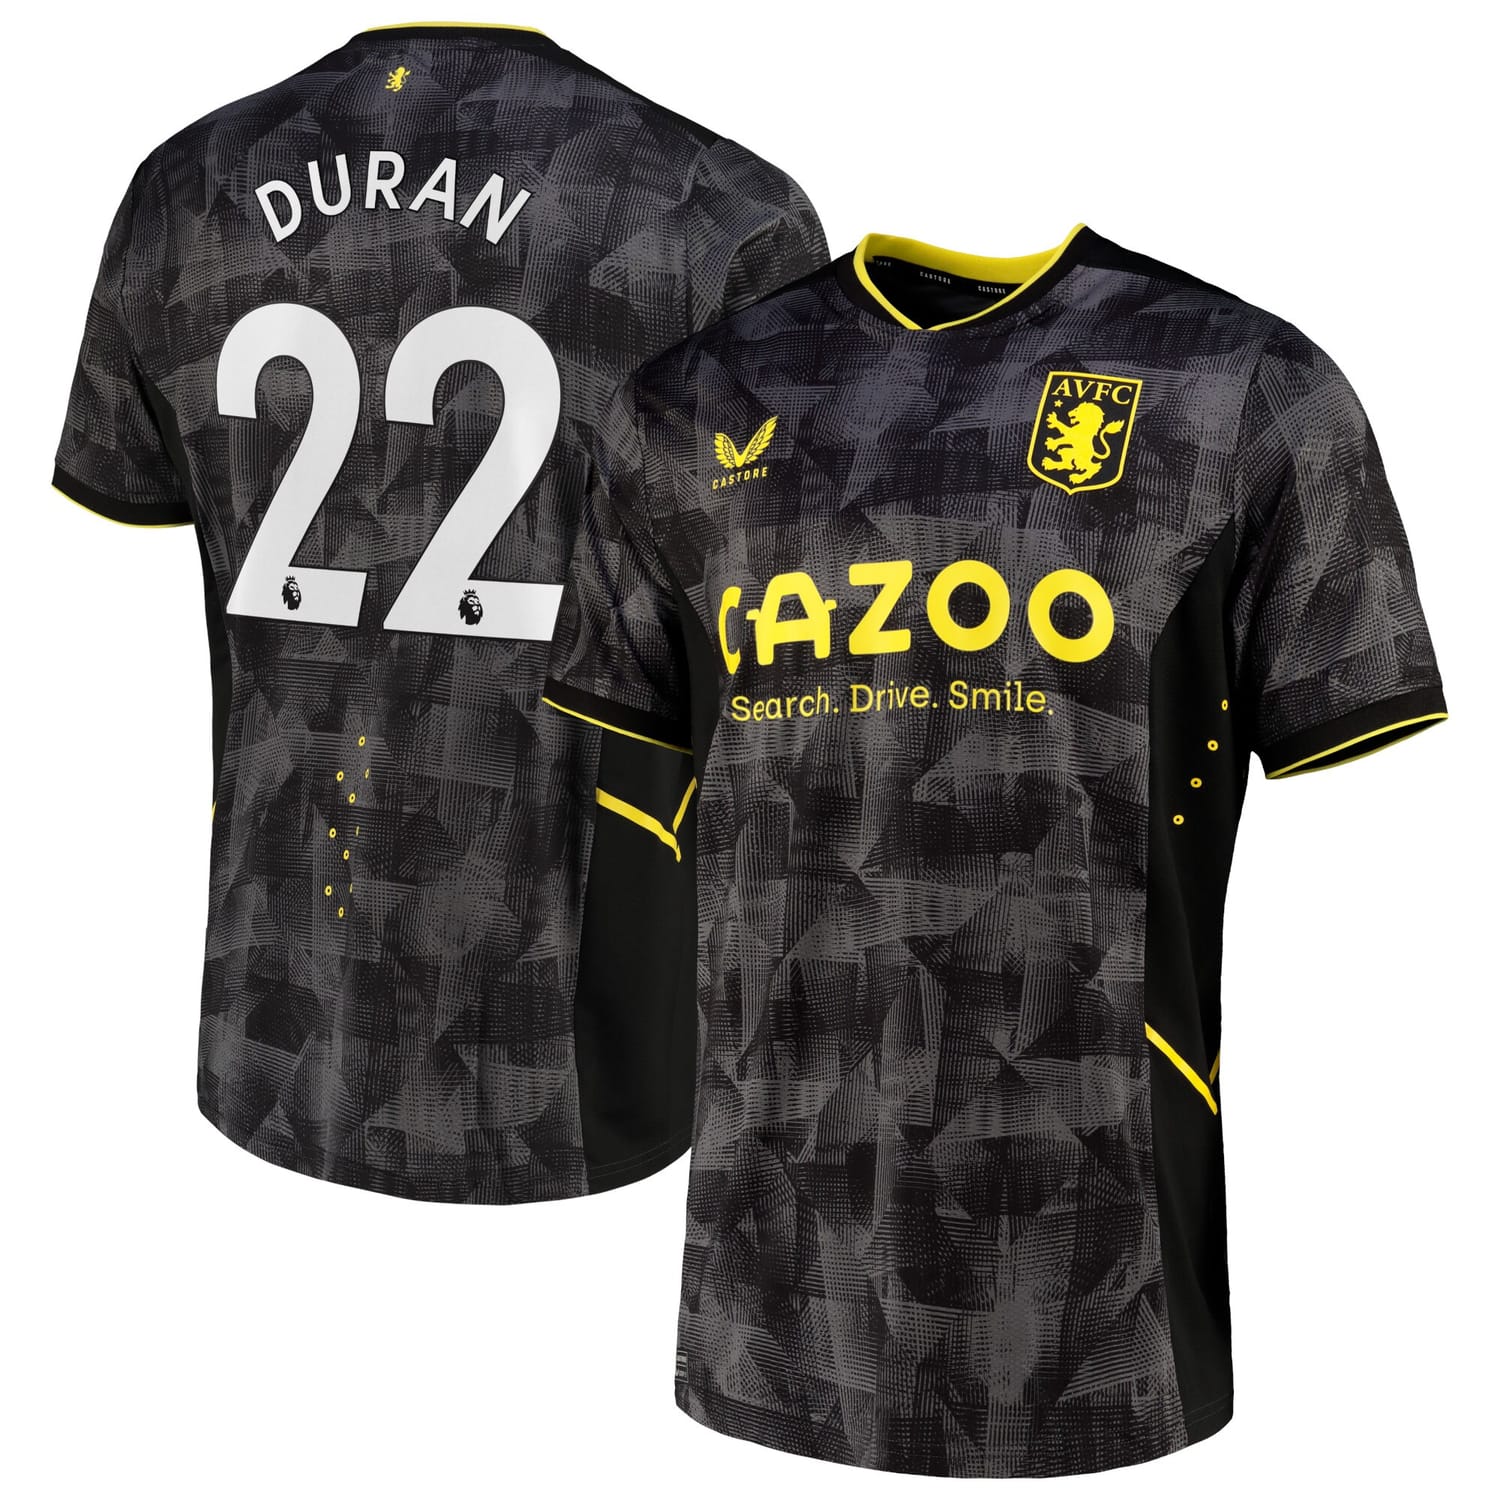 Premier League Aston Villa Third Pro Jersey Shirt 2022-23 player Duran 22 printing for Men